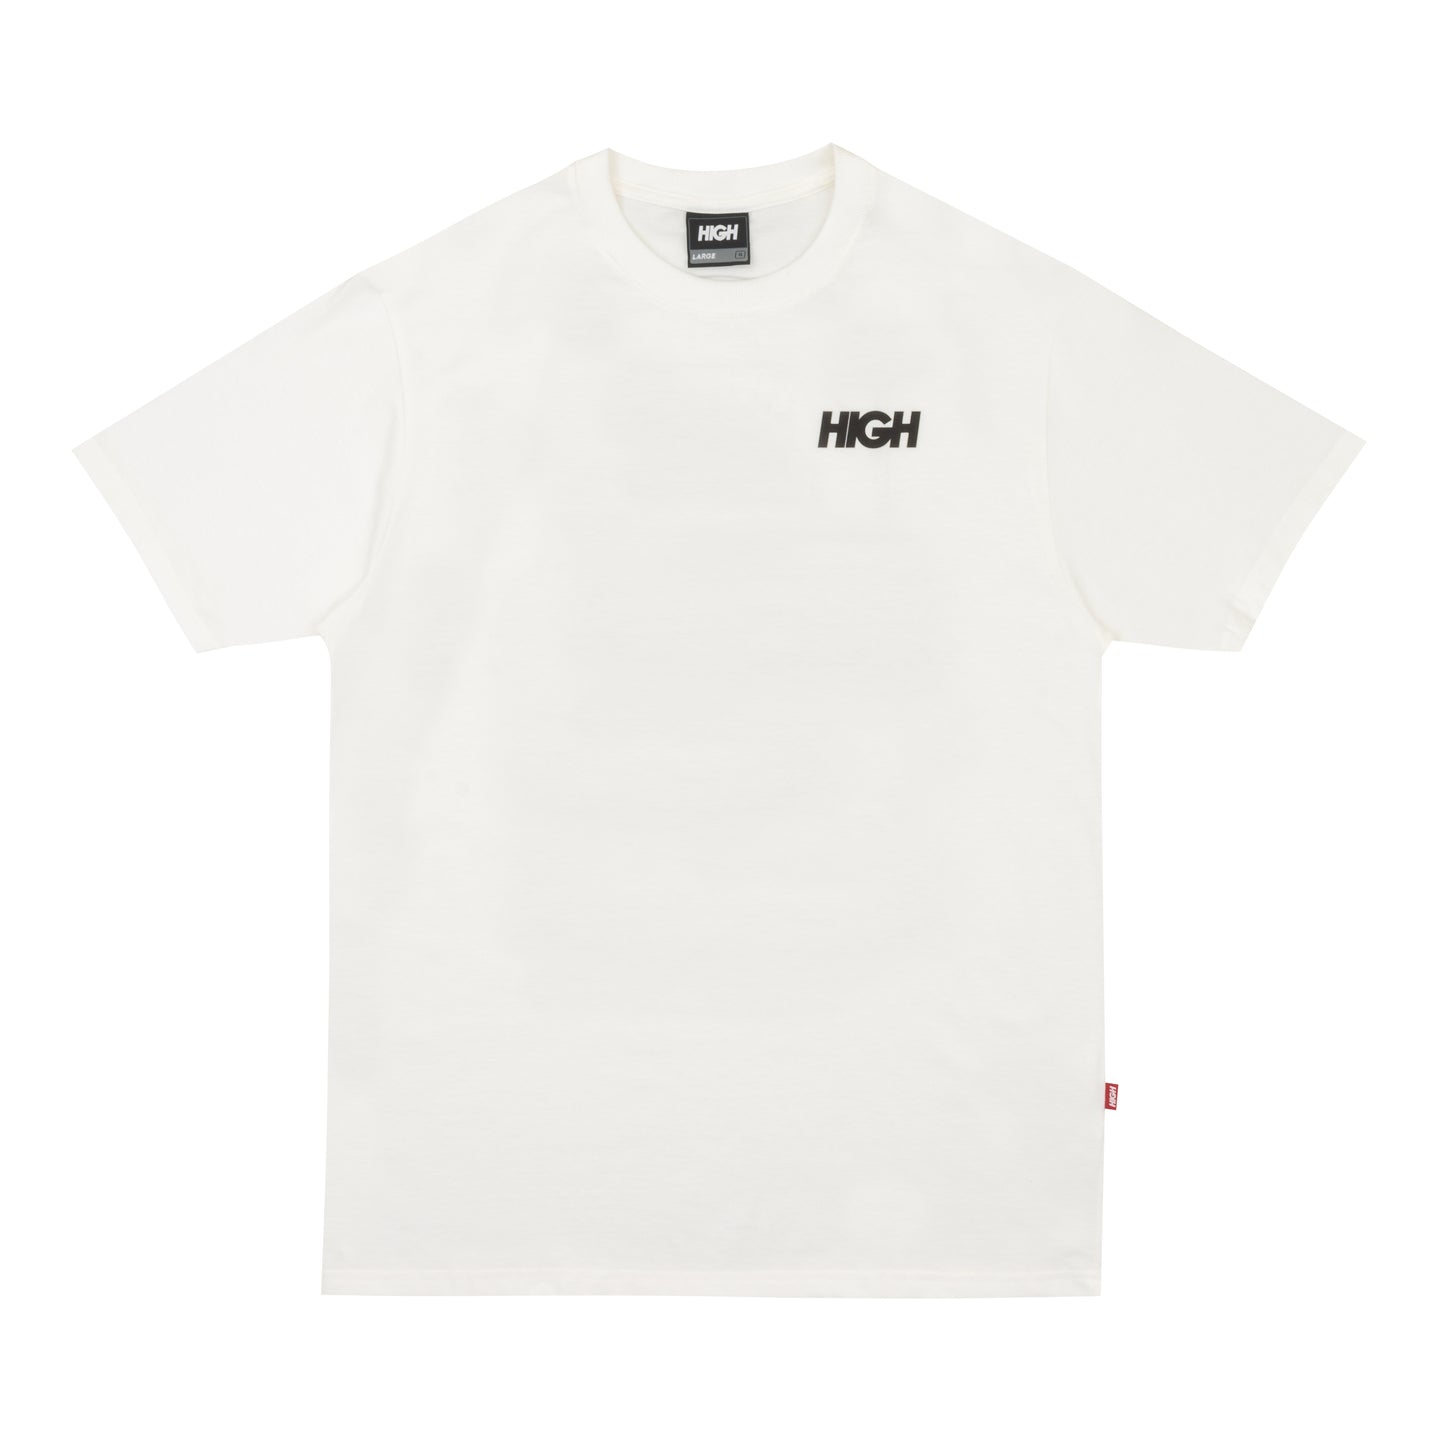 HIGH - Camiseta Pinball "White" - THE GAME